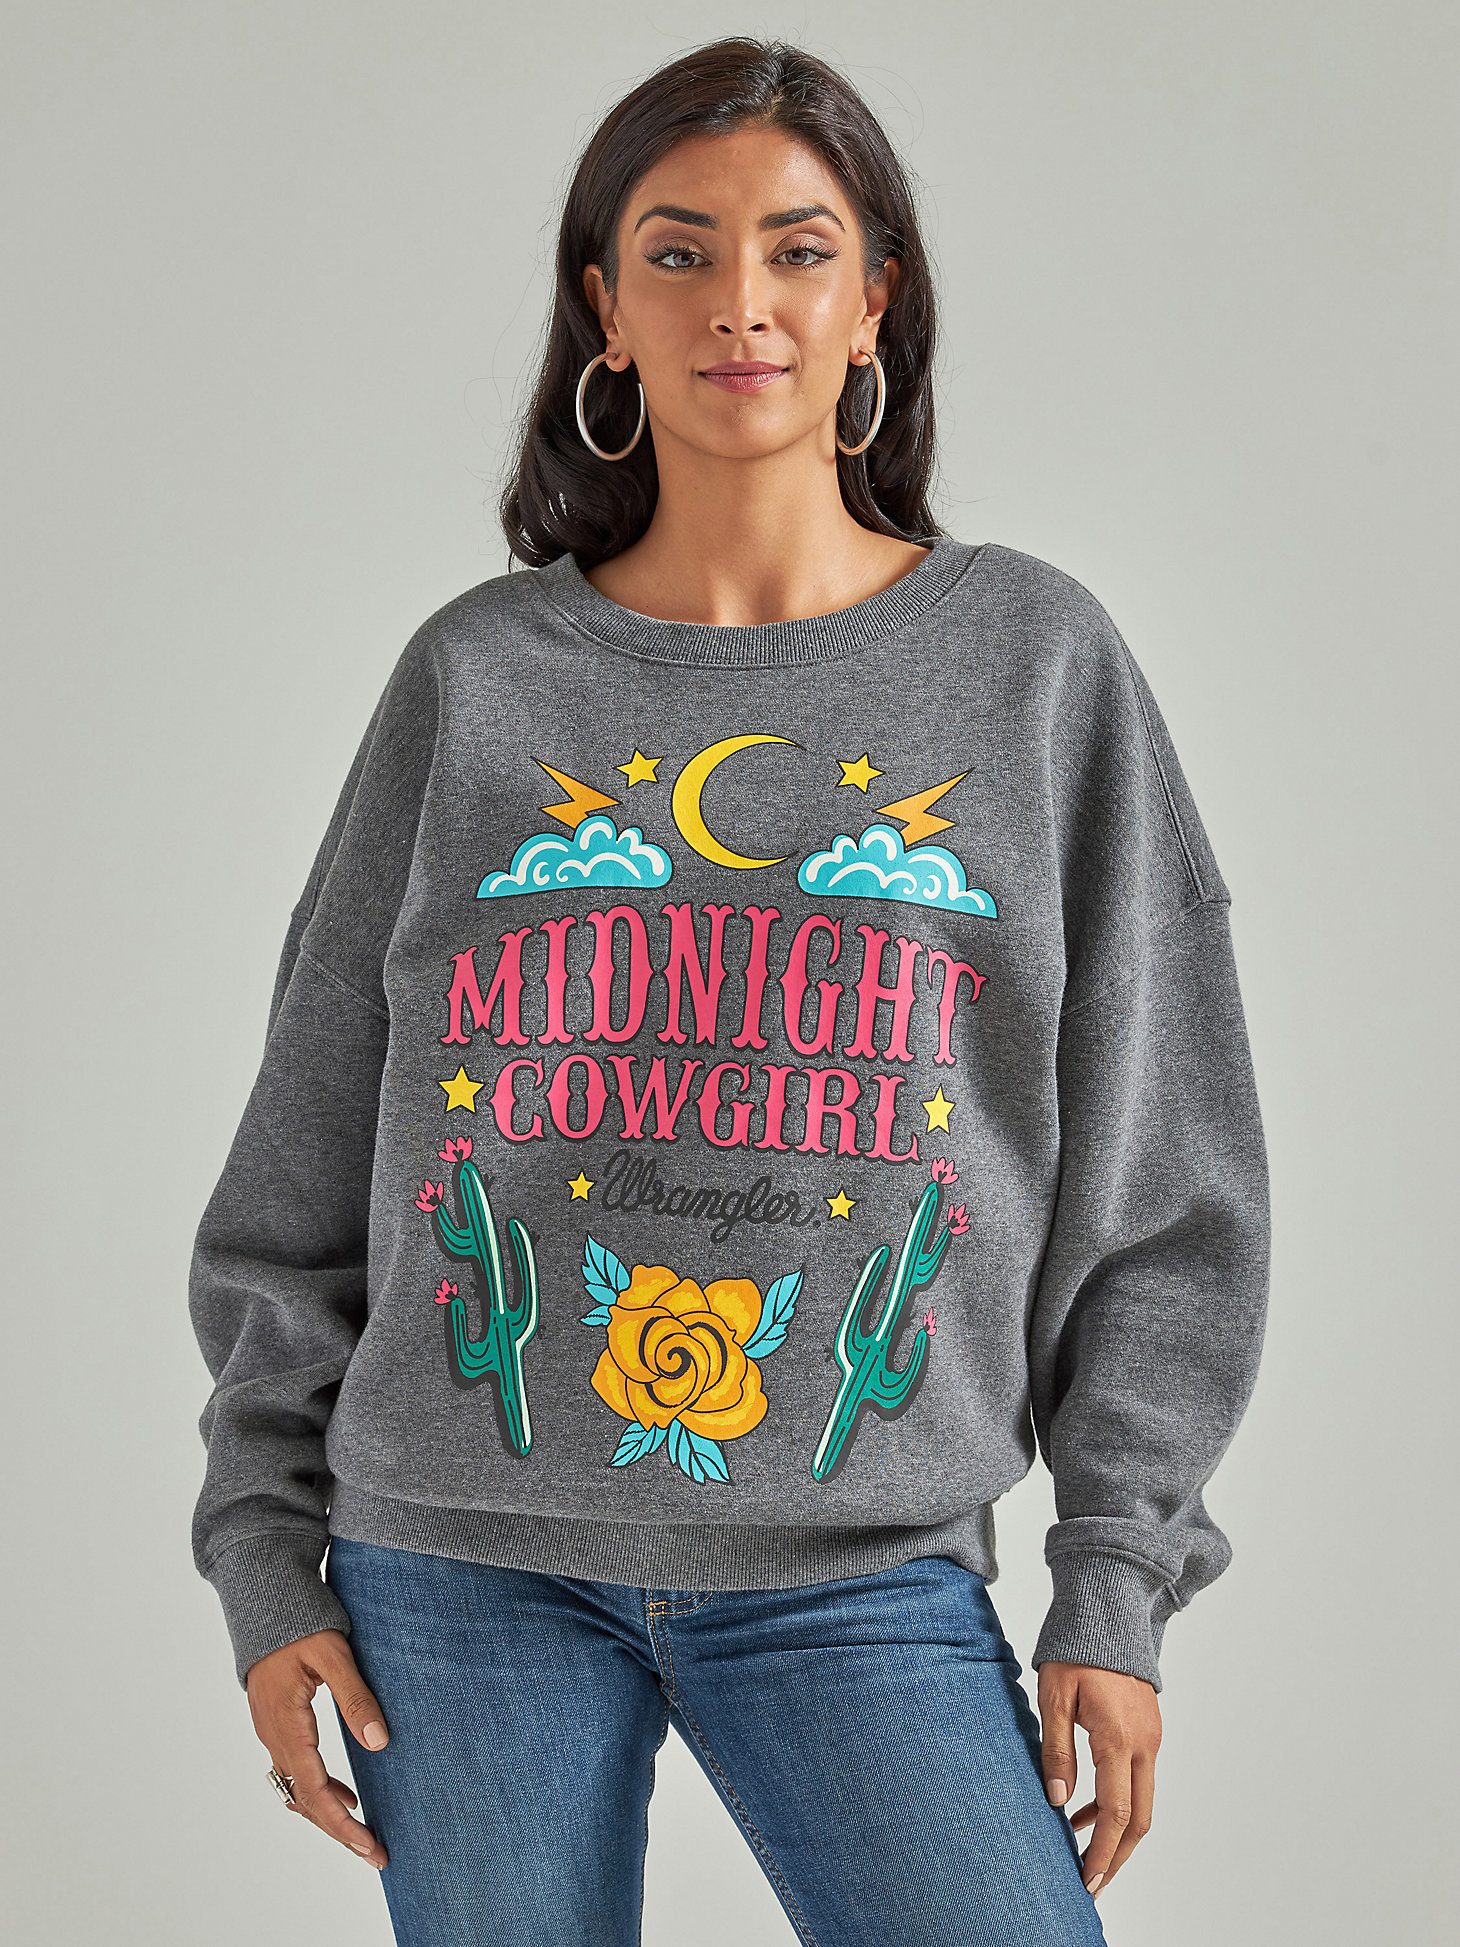 Women's Wrangler Retro® Midnight Cowgirl Oversized Sweatshirt in Grey main view